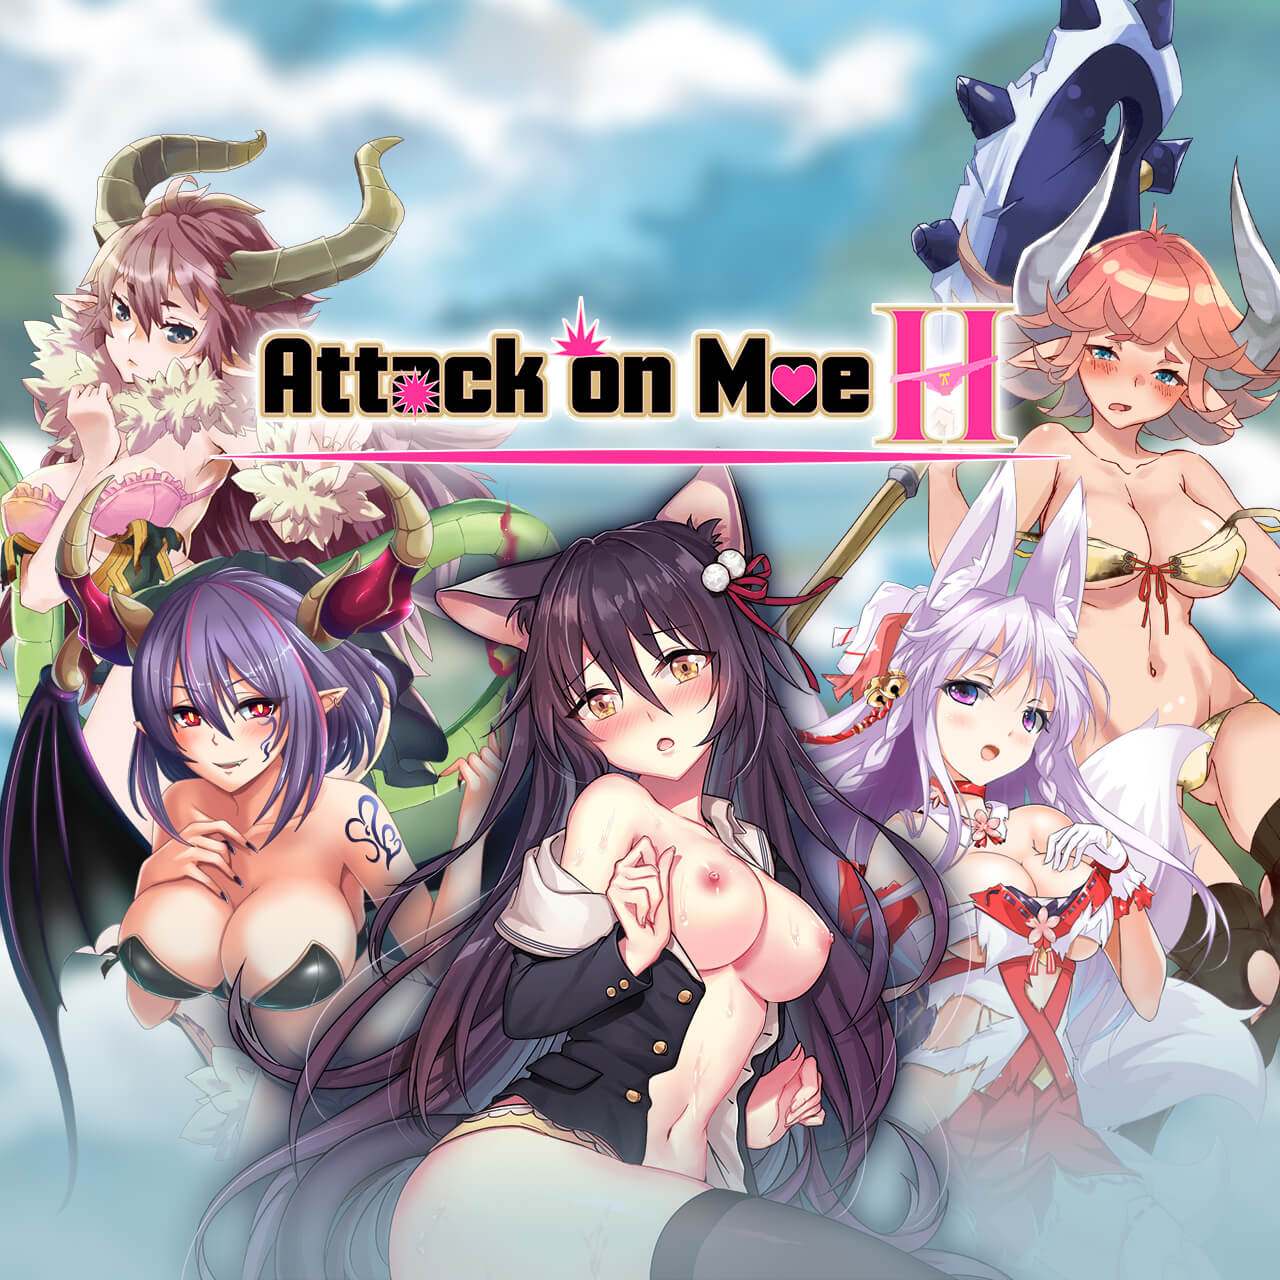 Moe Hentai Gallery - Attack On Moe H - Clicker Sex Game with APK file | Nutaku